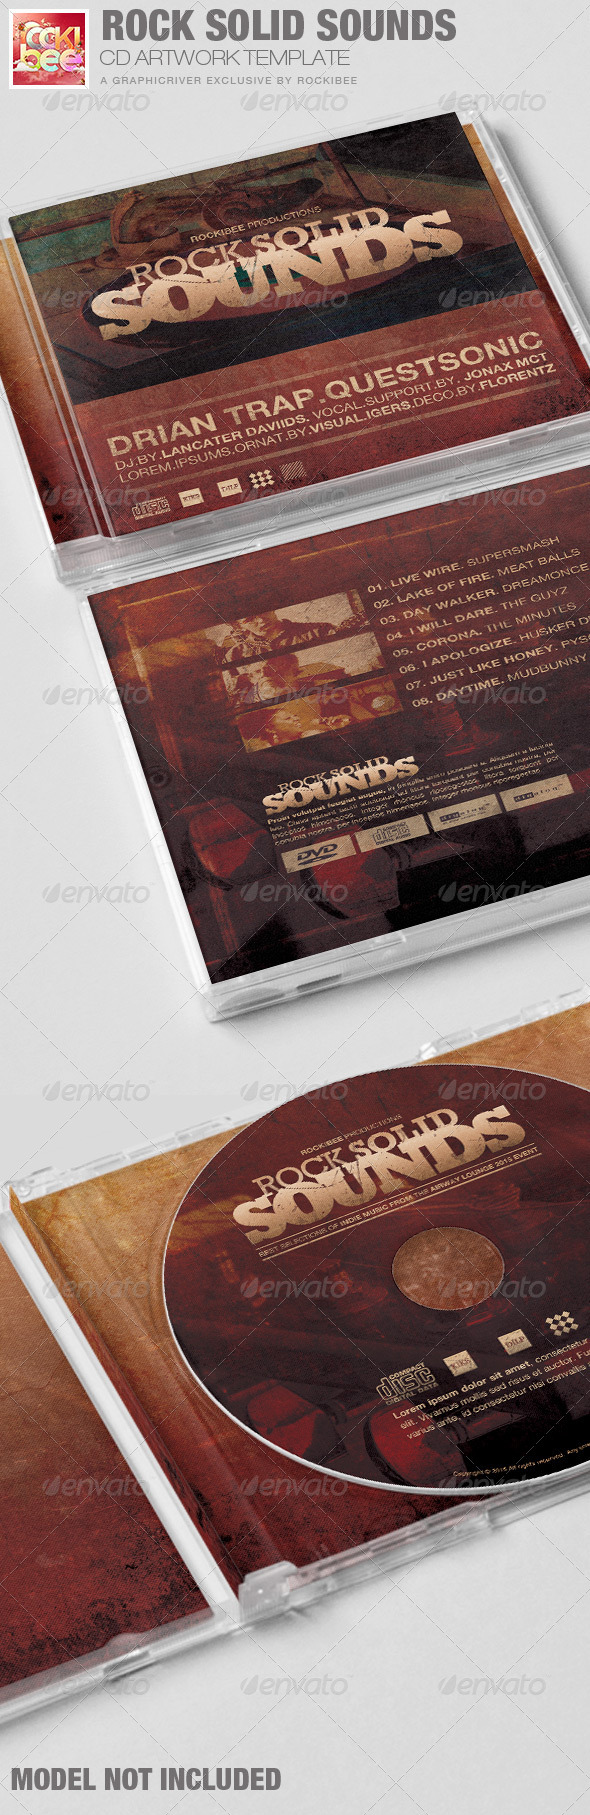 Rock Solid Sounds CD Artwork Template (CD & DVD artwork)